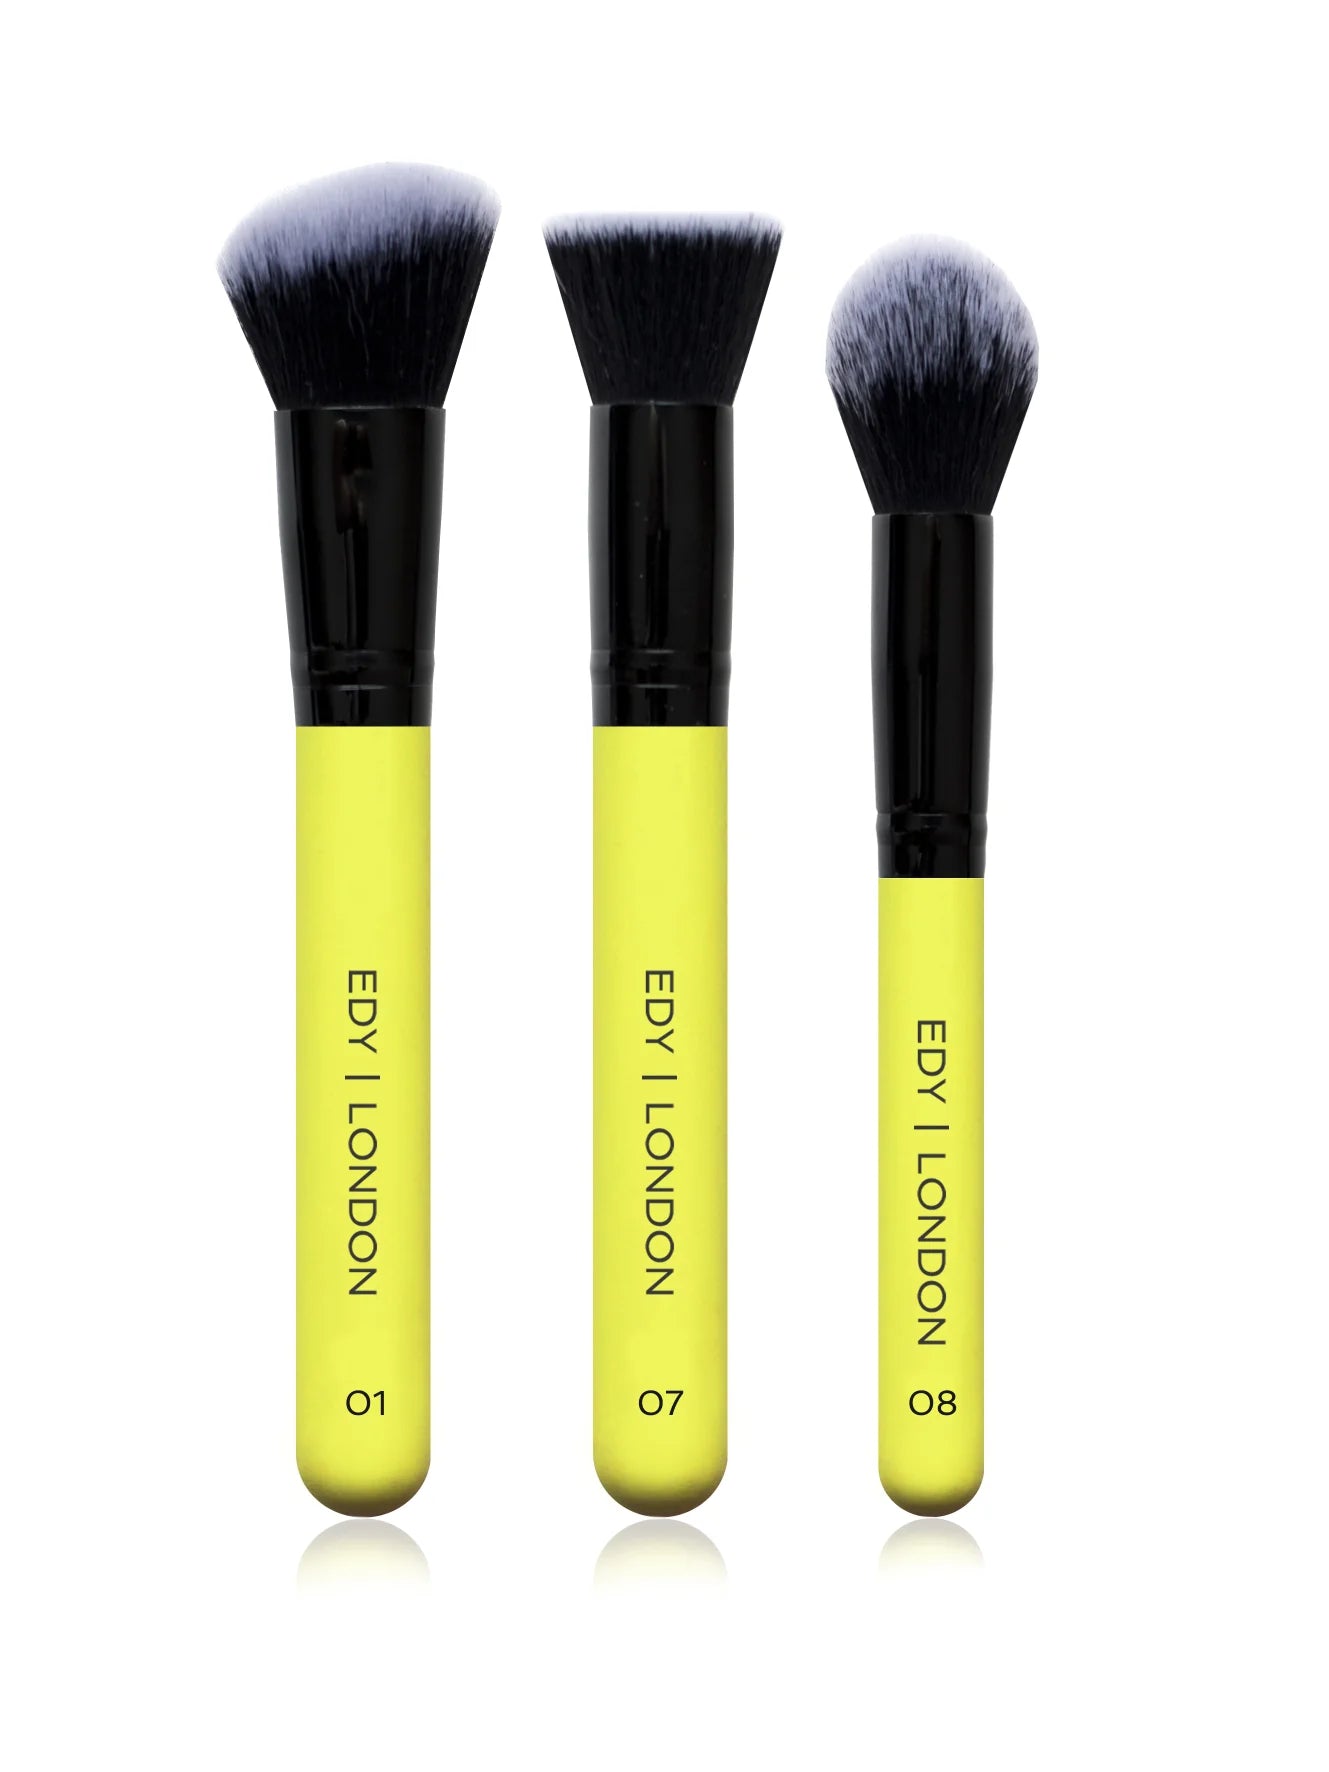 Dewy Skin Brush Set 508 Make-up Brush EDY LONDON Lemon   - EDY LONDON PRODUCTS UK - The Best Makeup Brushes - shop.edy.london